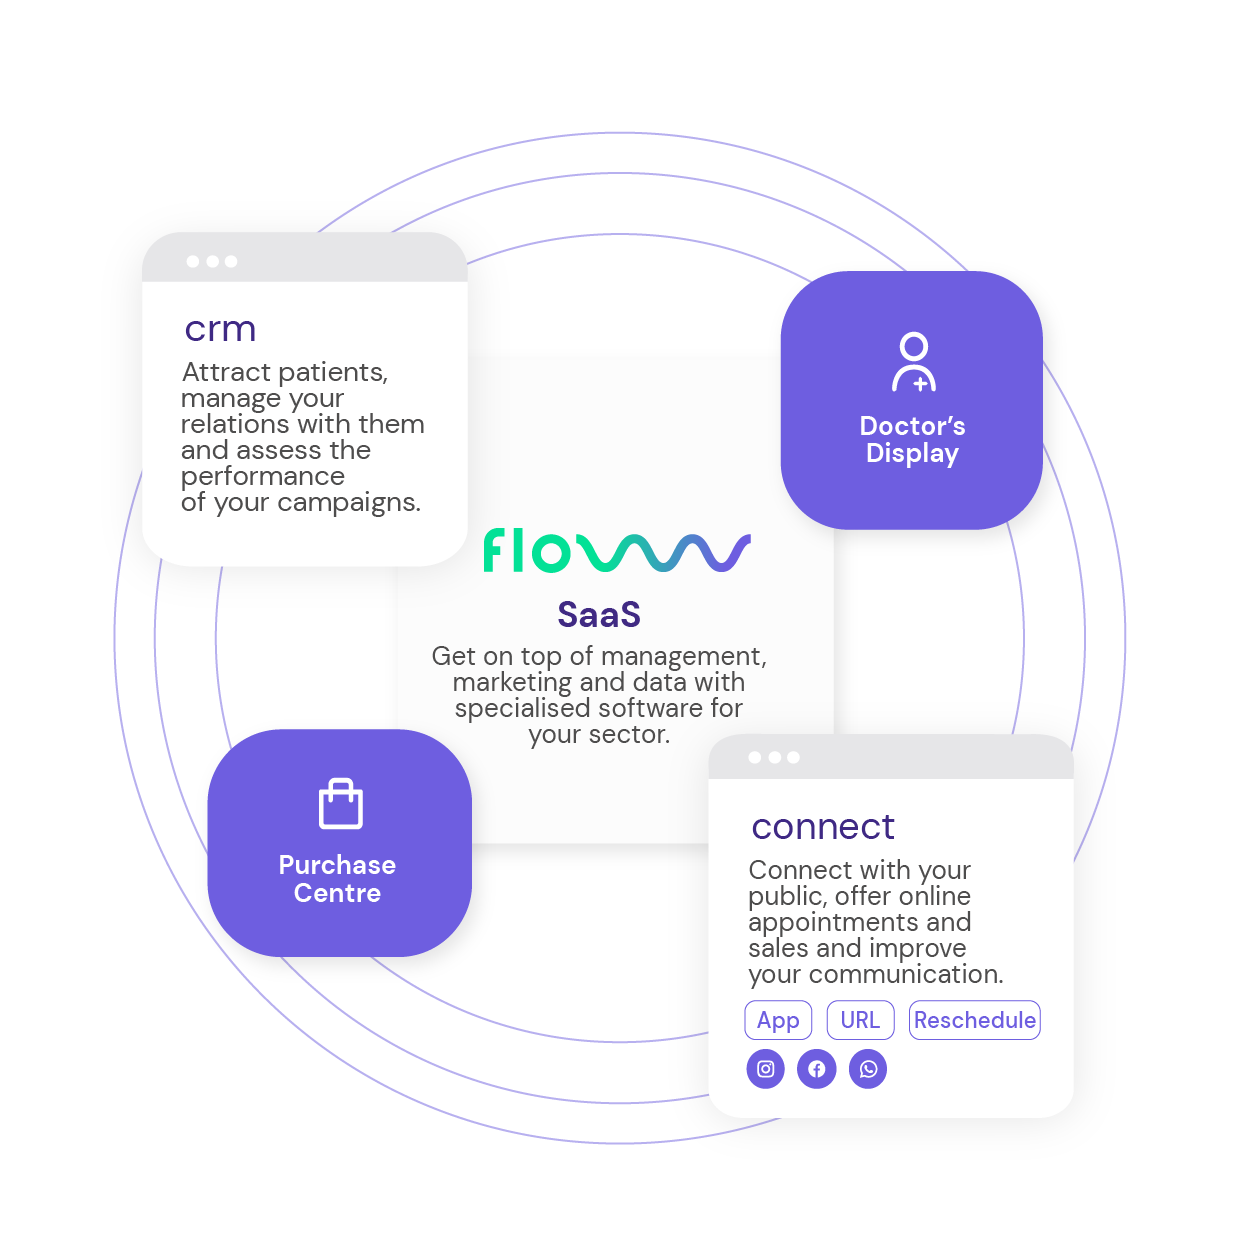 flowww - Digital ecosystem - SaaS - flowww connect - flowww crm - Doctor's Display - Purchase centre